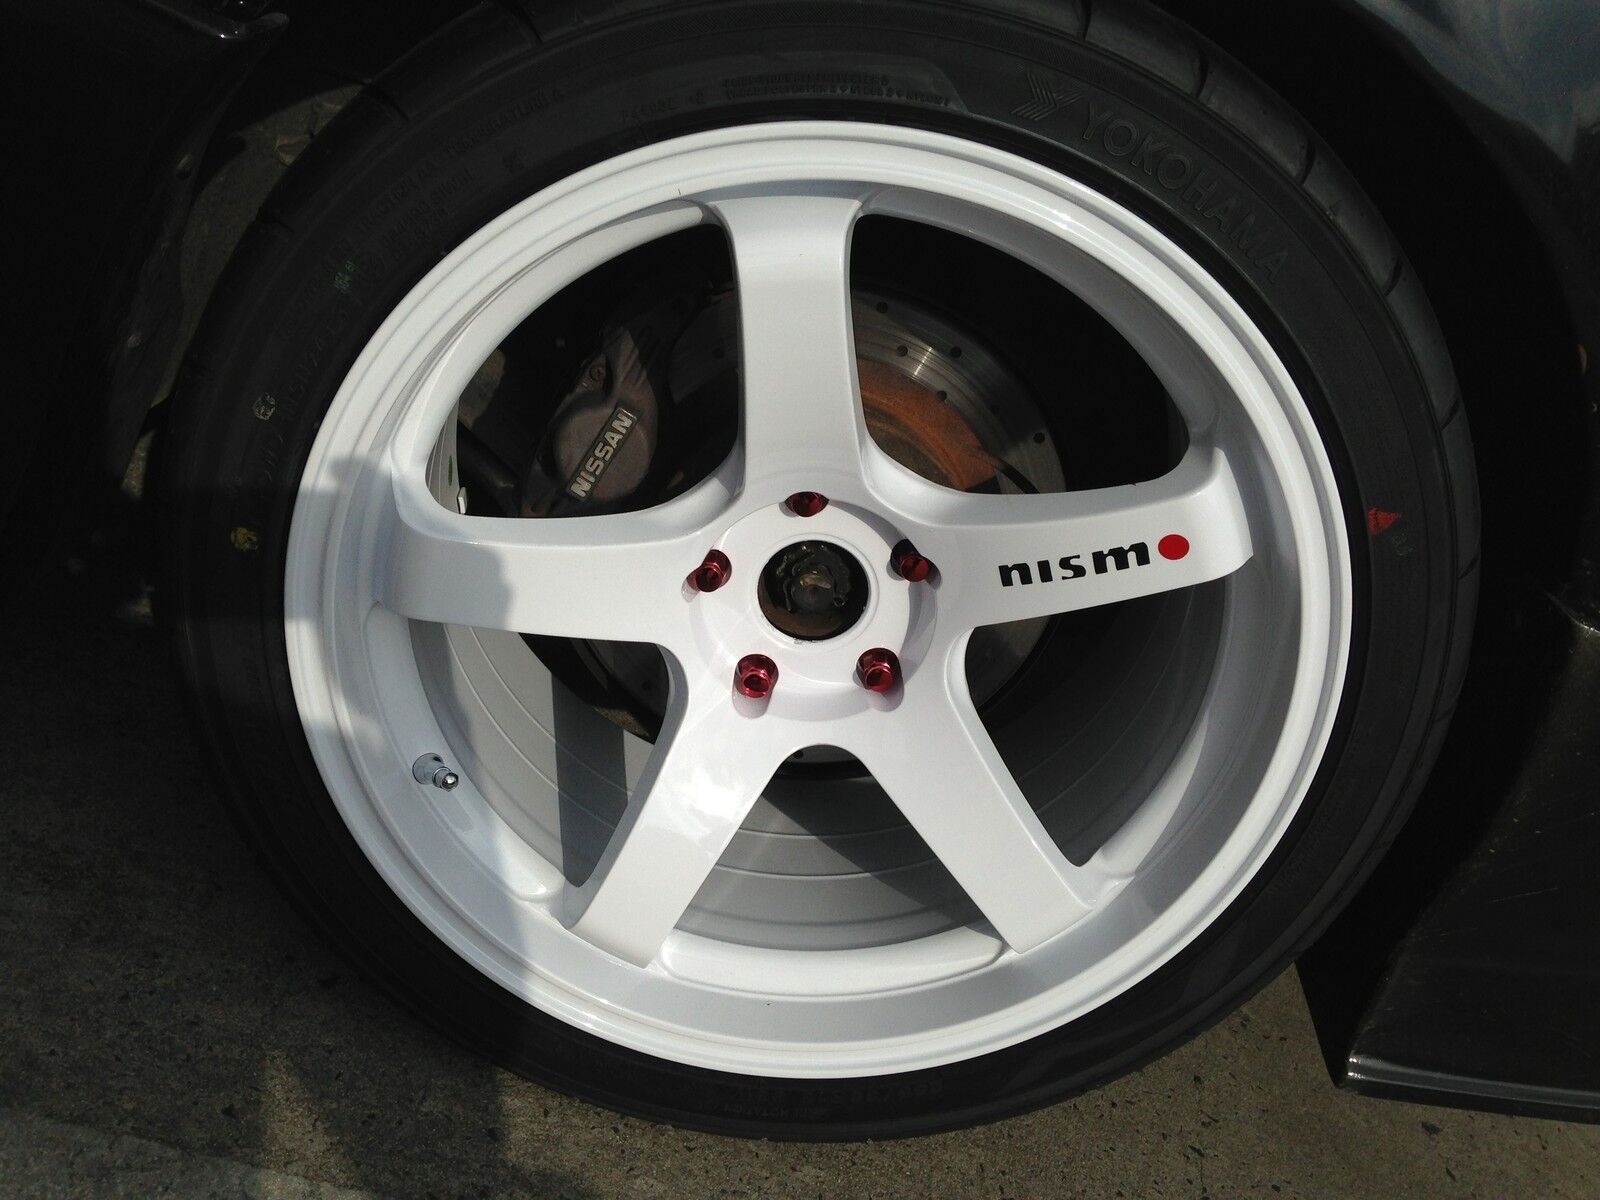 Nismo sticker for wheel spoke X4 silvia,skyline,pulsar,350Z,370Z,350GT black red